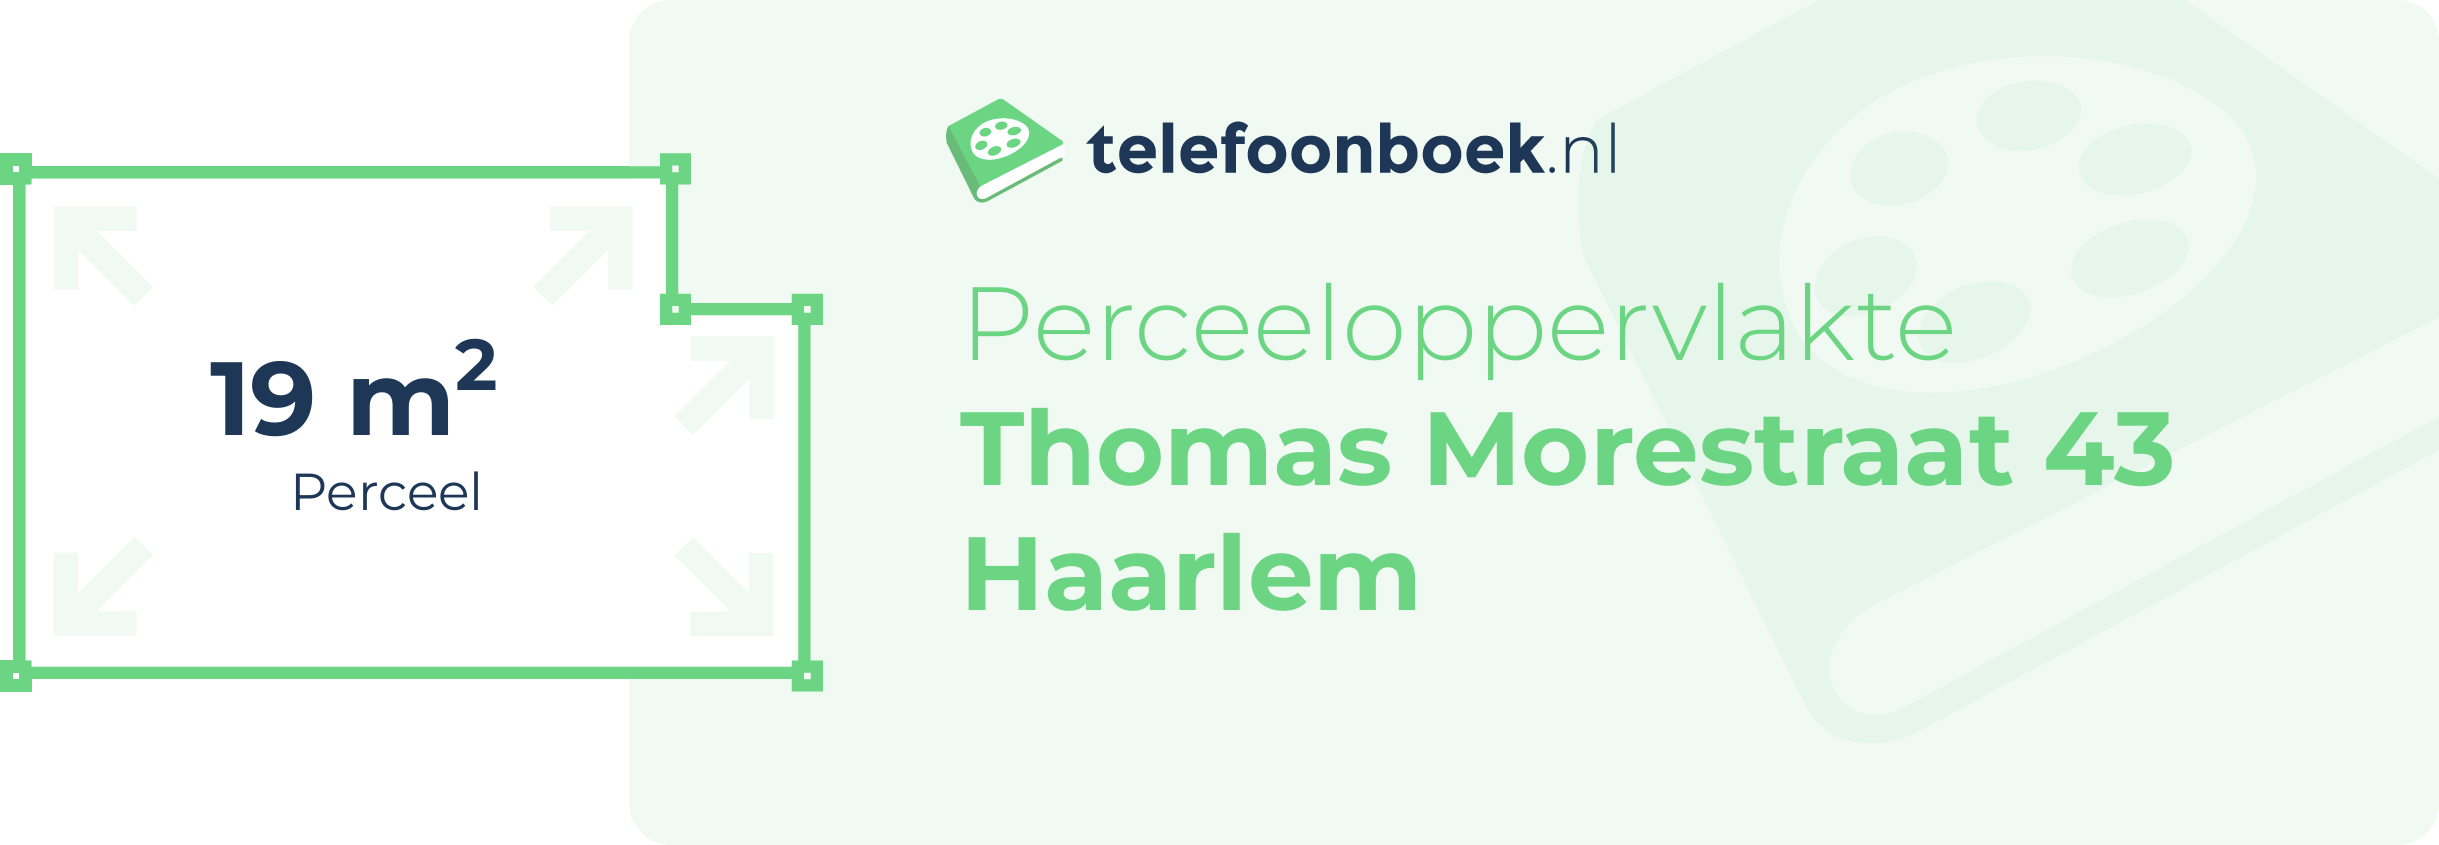 Perceeloppervlakte Thomas Morestraat 43 Haarlem